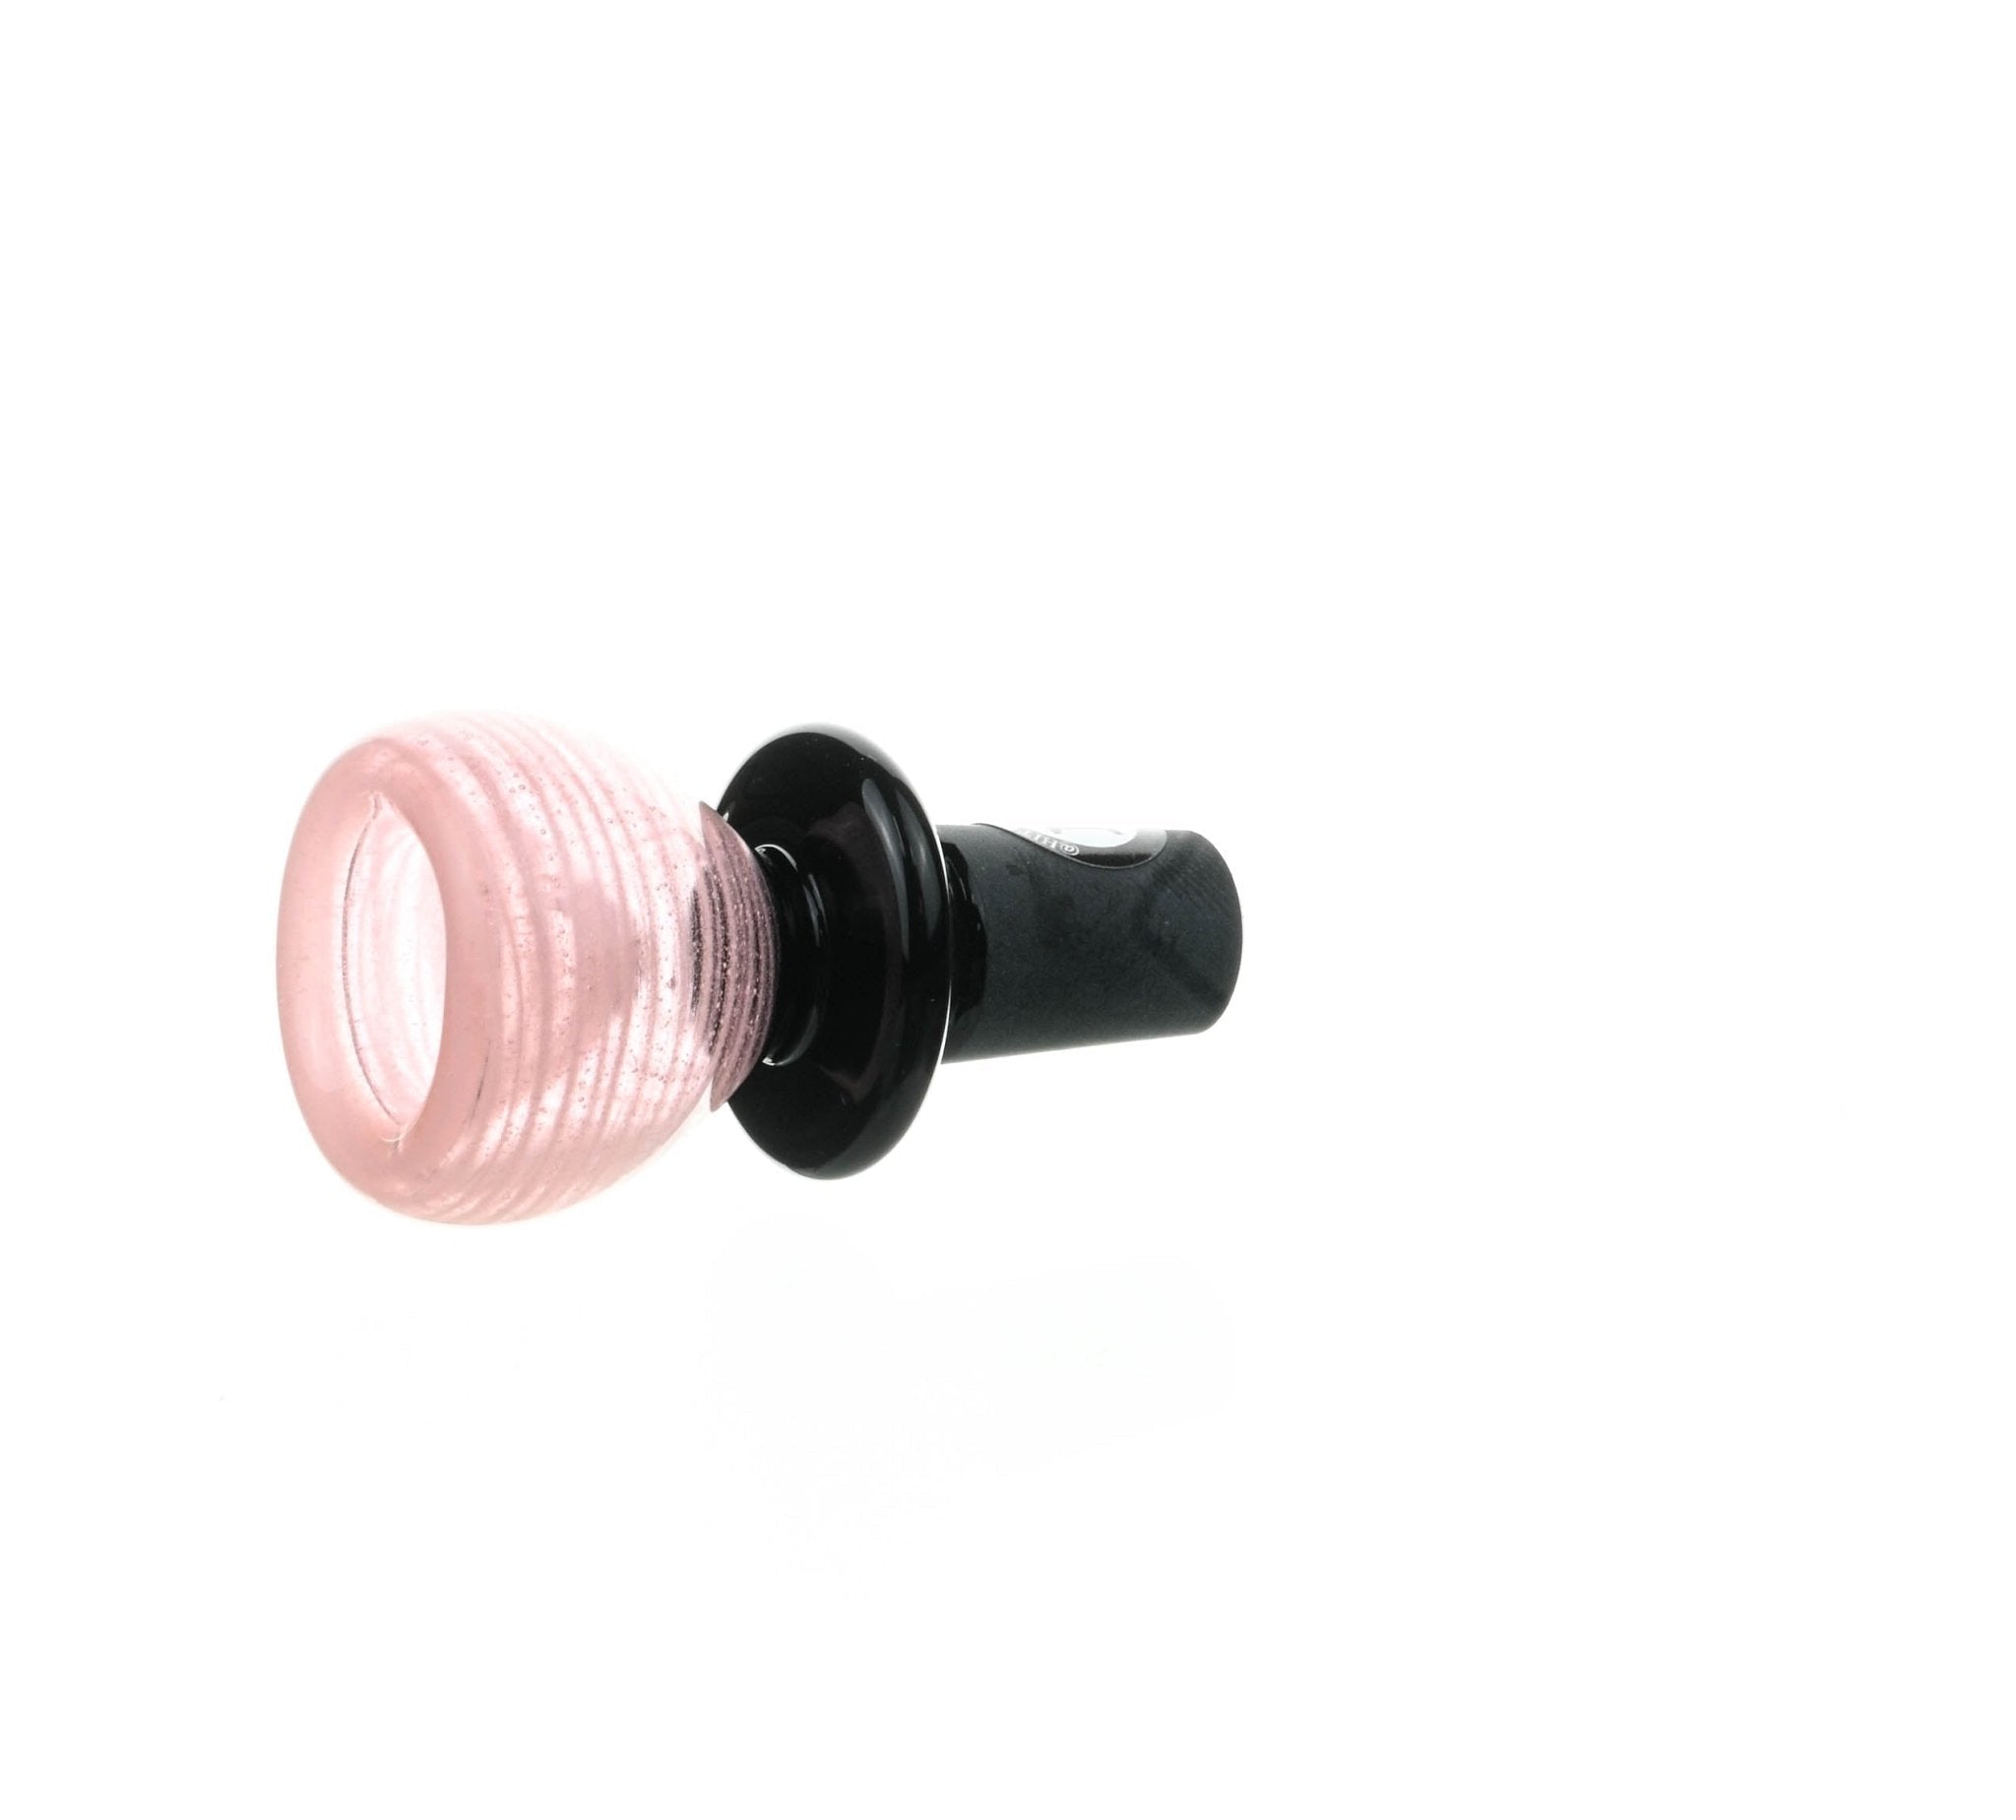 Joe Madigan Swirl Pink Round bowl 14 mm - Smoke Spot Smoke Shop